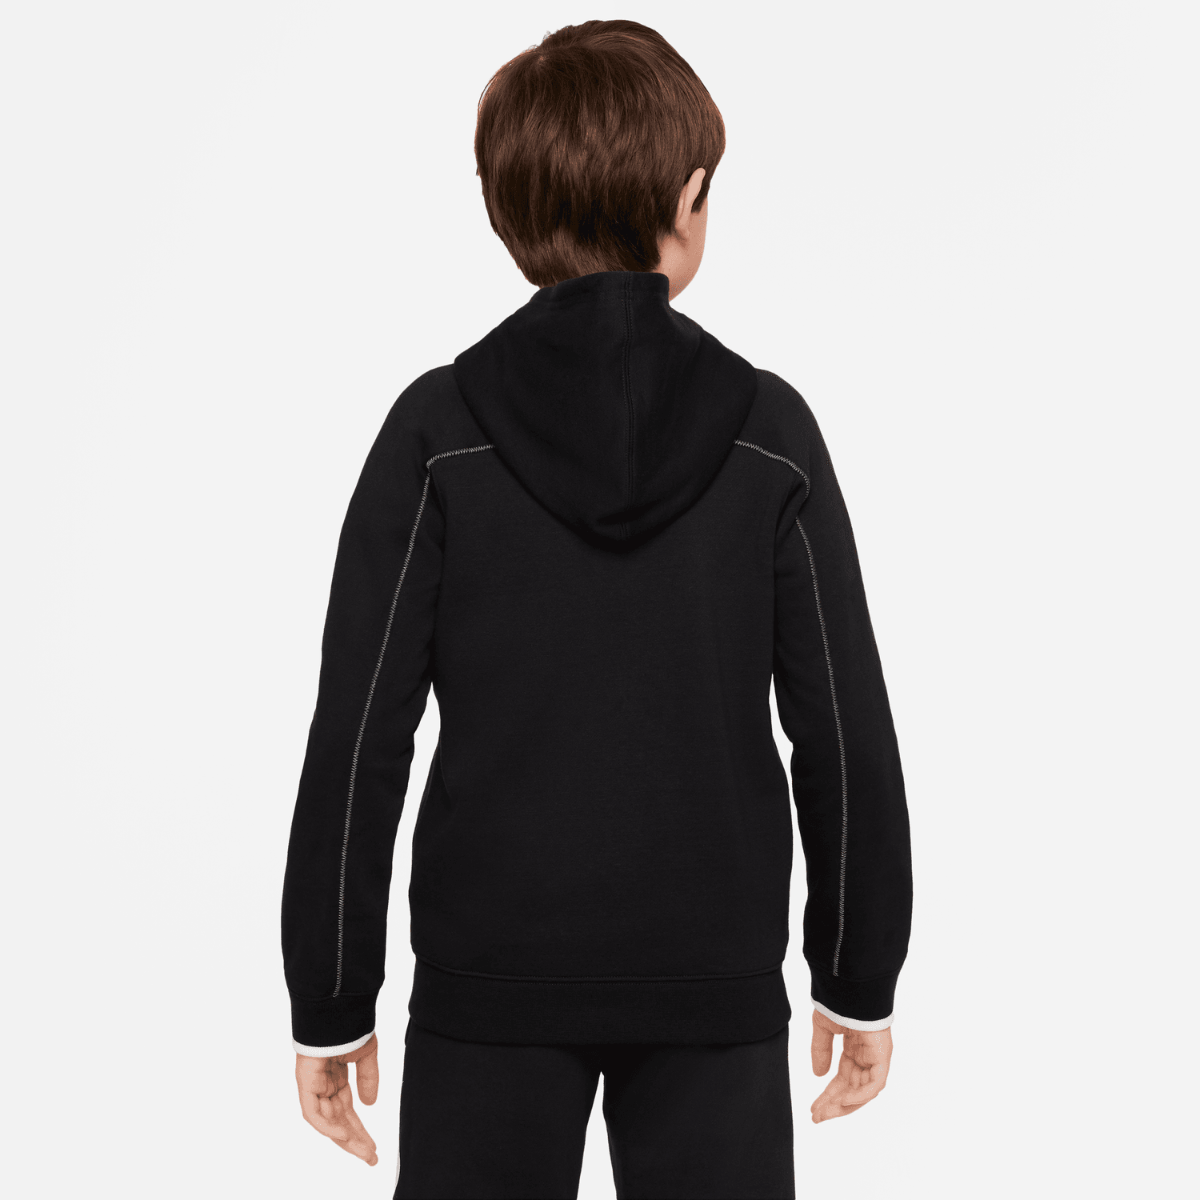 Nike Amplify Junior Jacket - Black